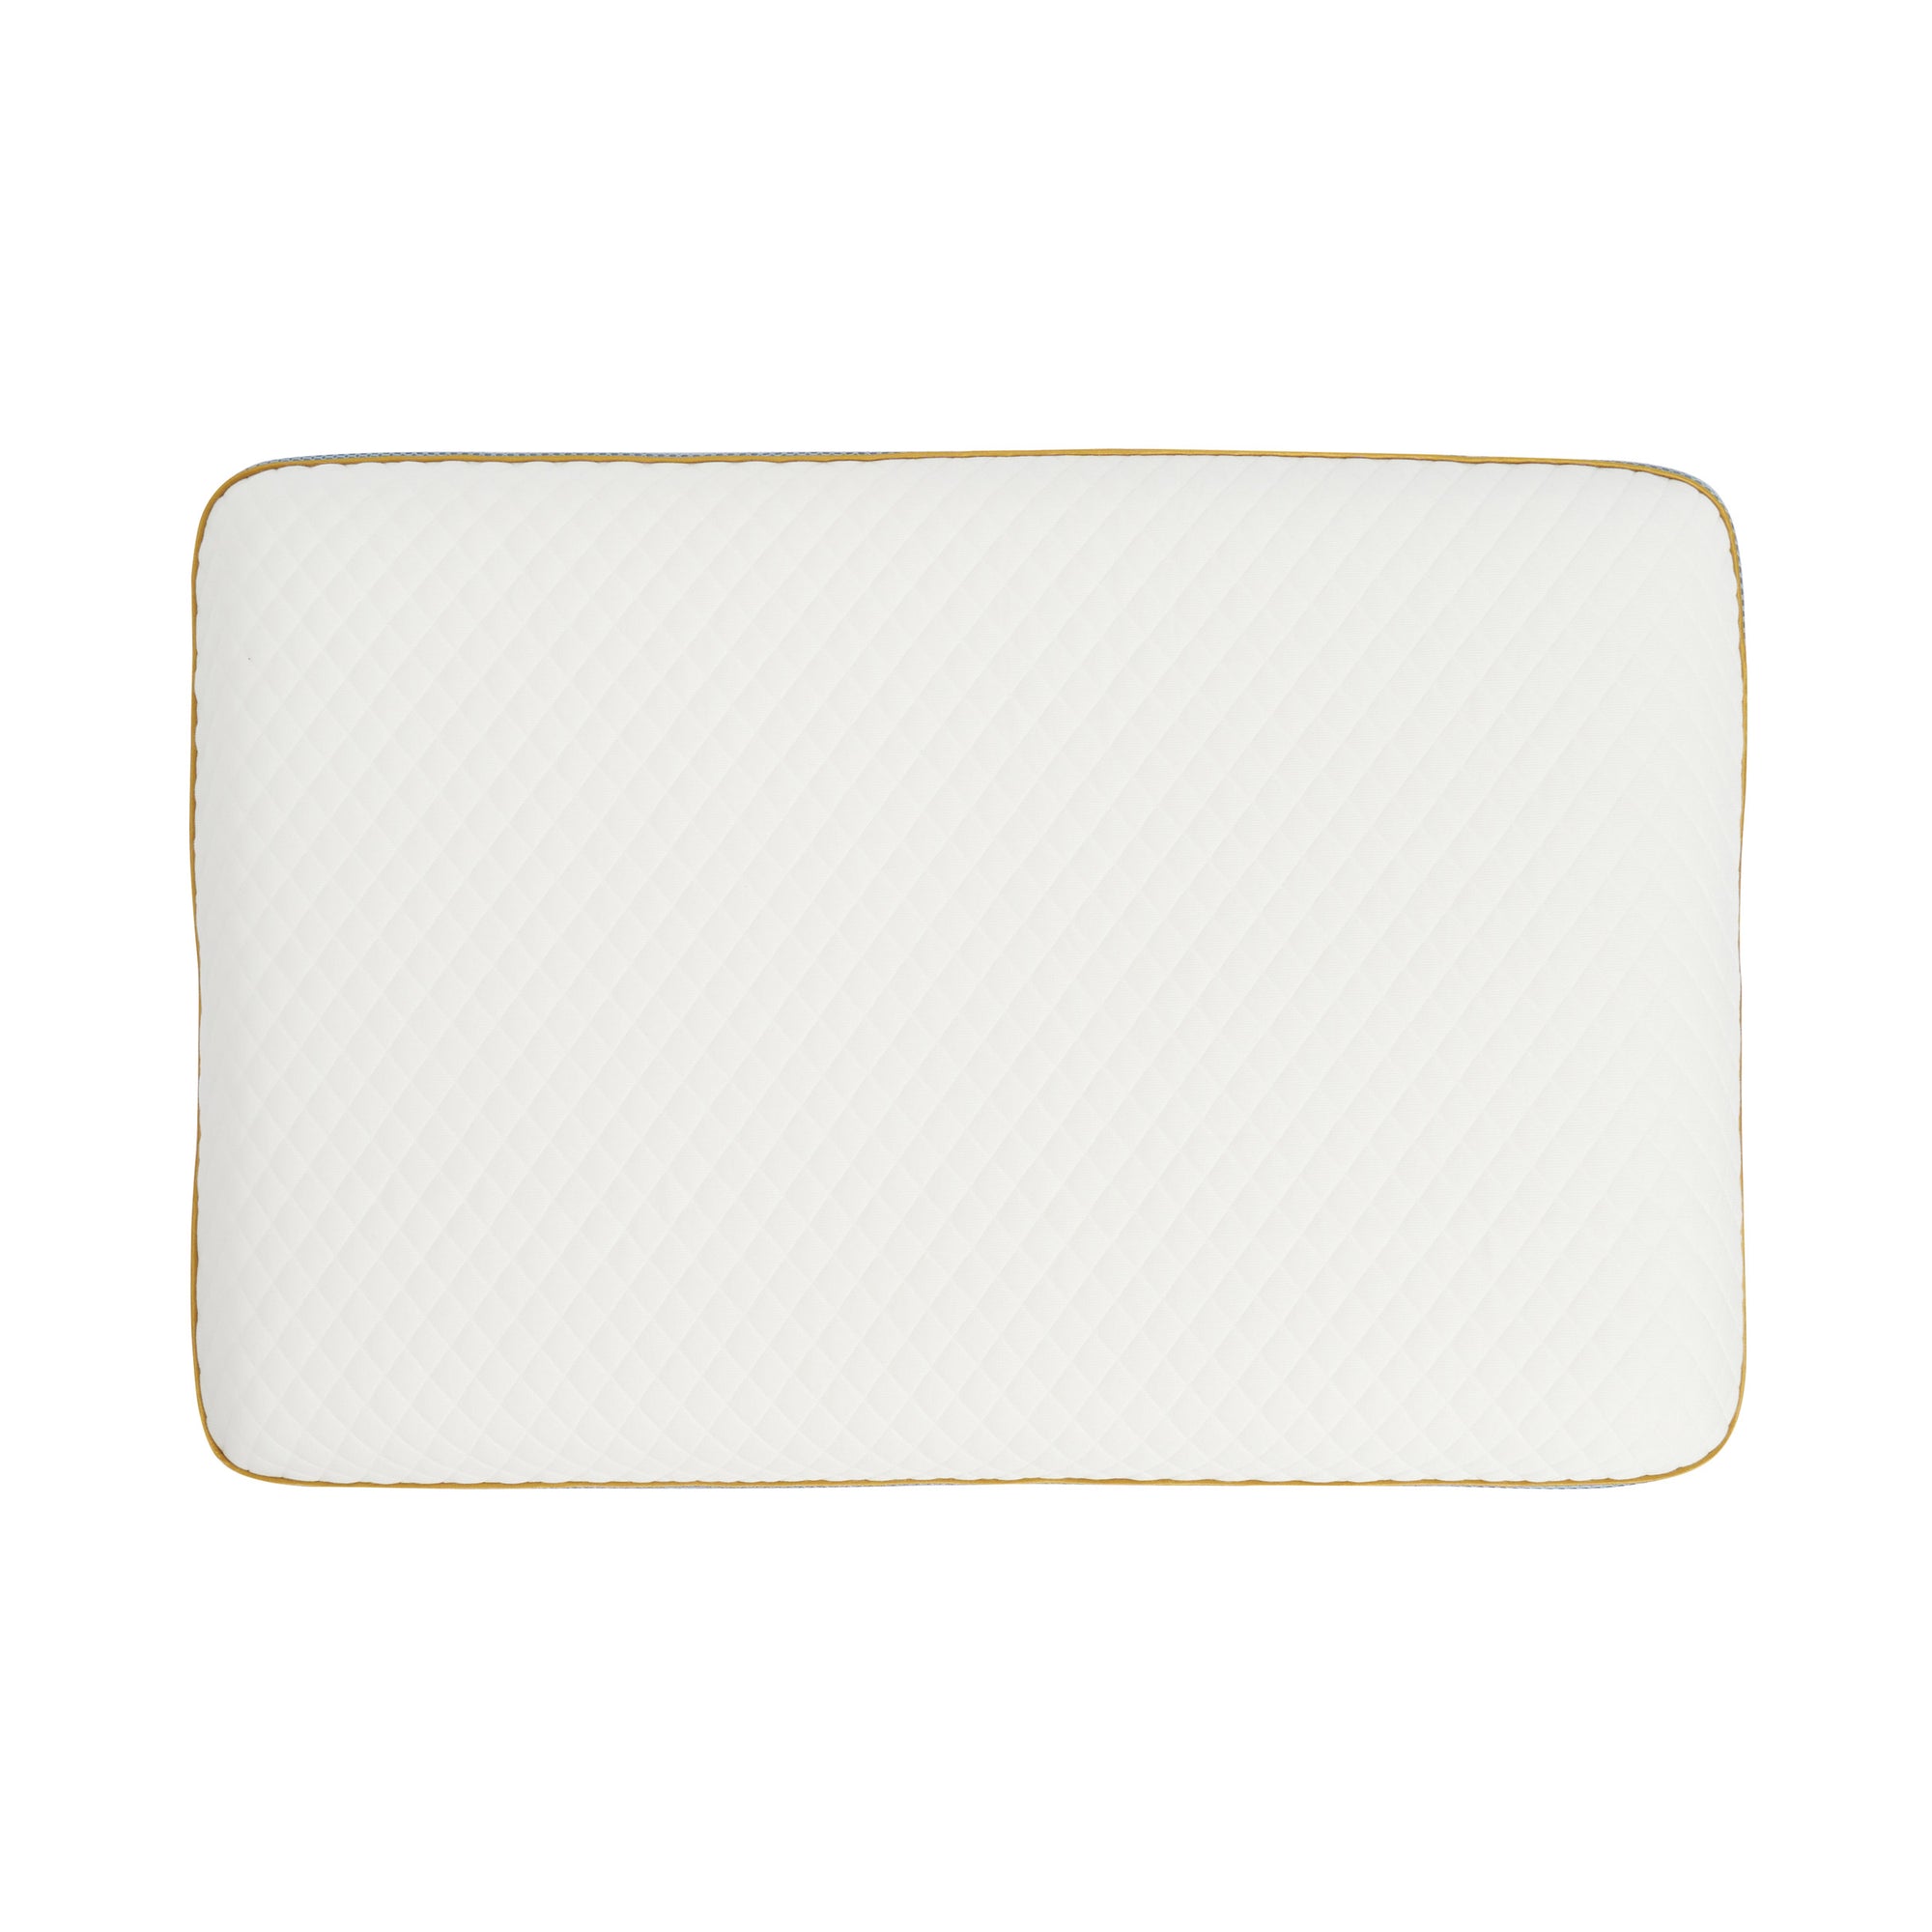 ComfyCozy Classic Memory Foam Pillow Case